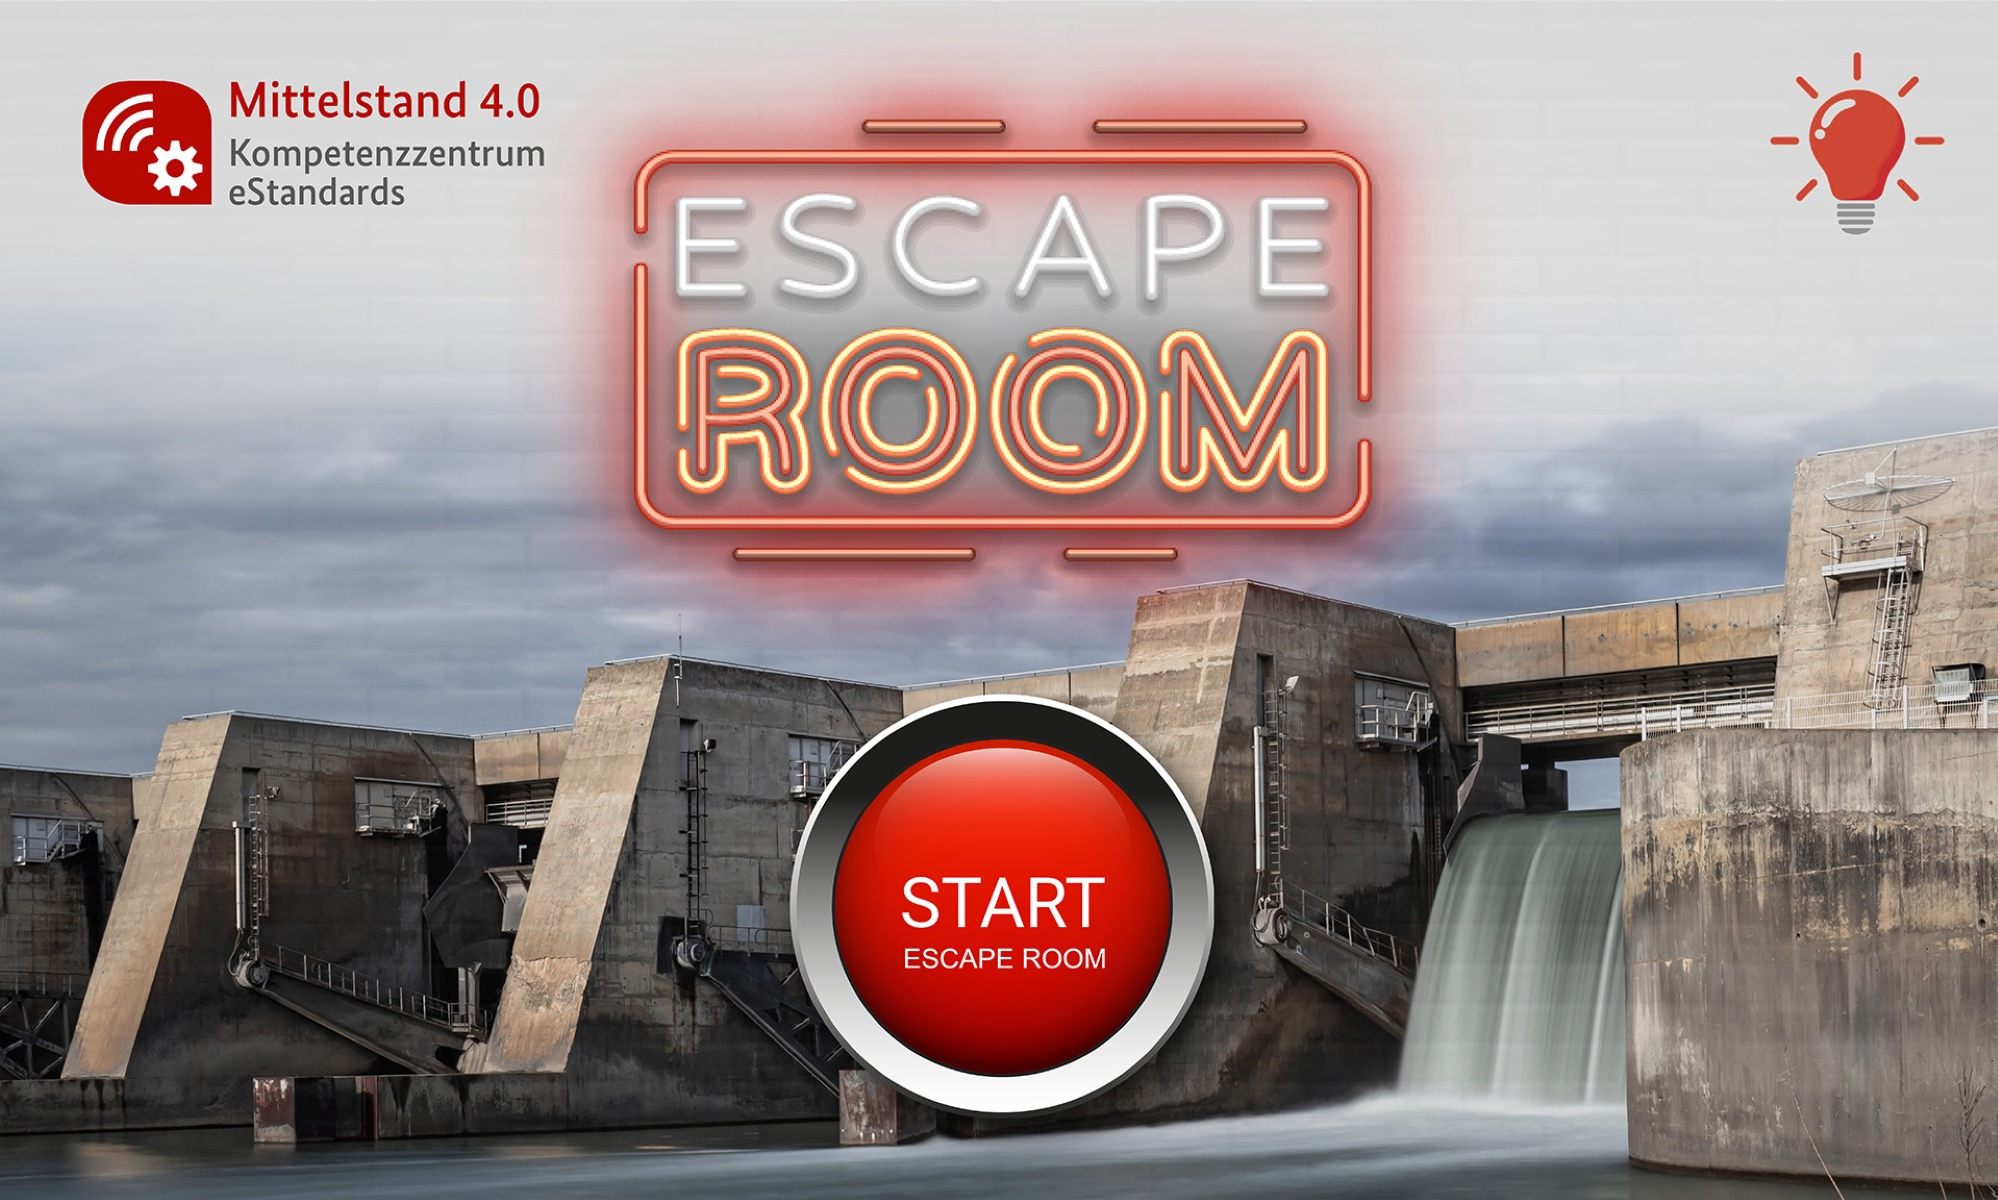 Escape Room Startbildschirm (Bildquelle: www.mittelstand-digital.de)